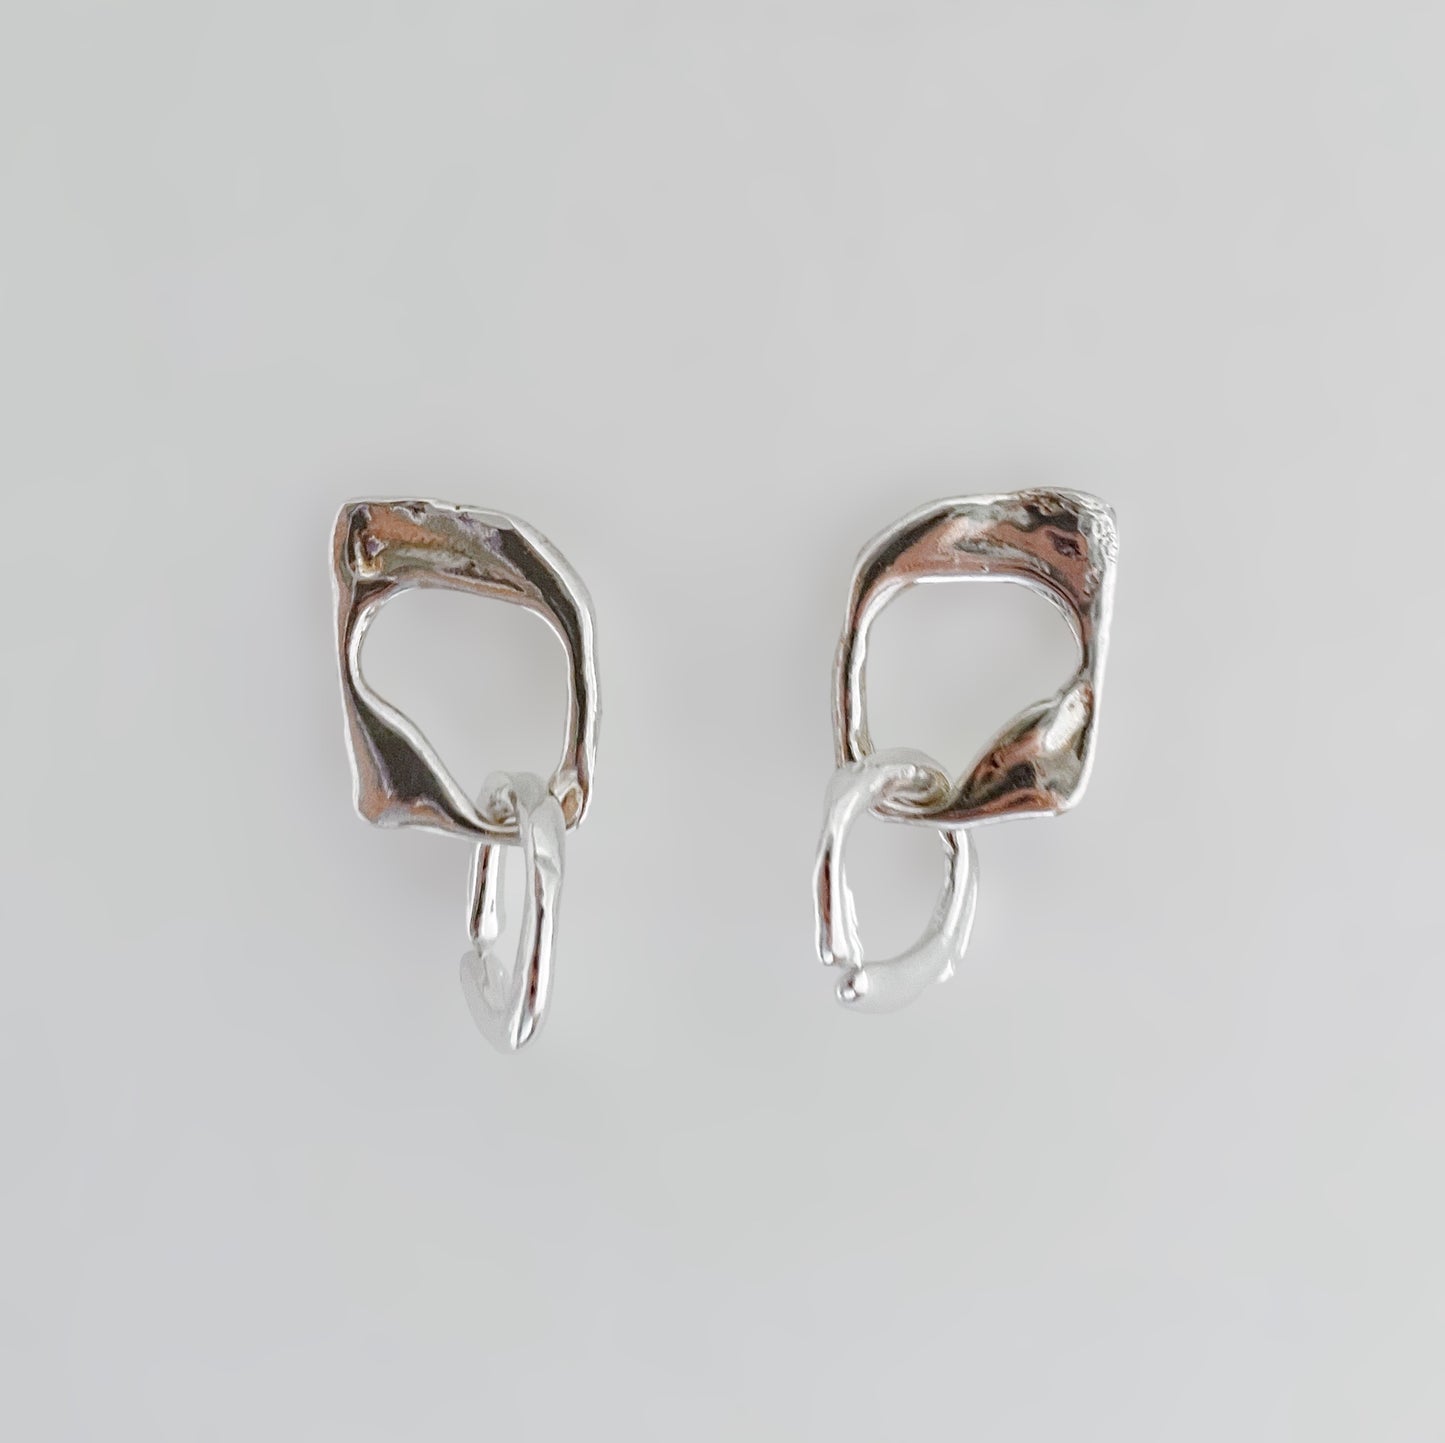 Laurel earrings